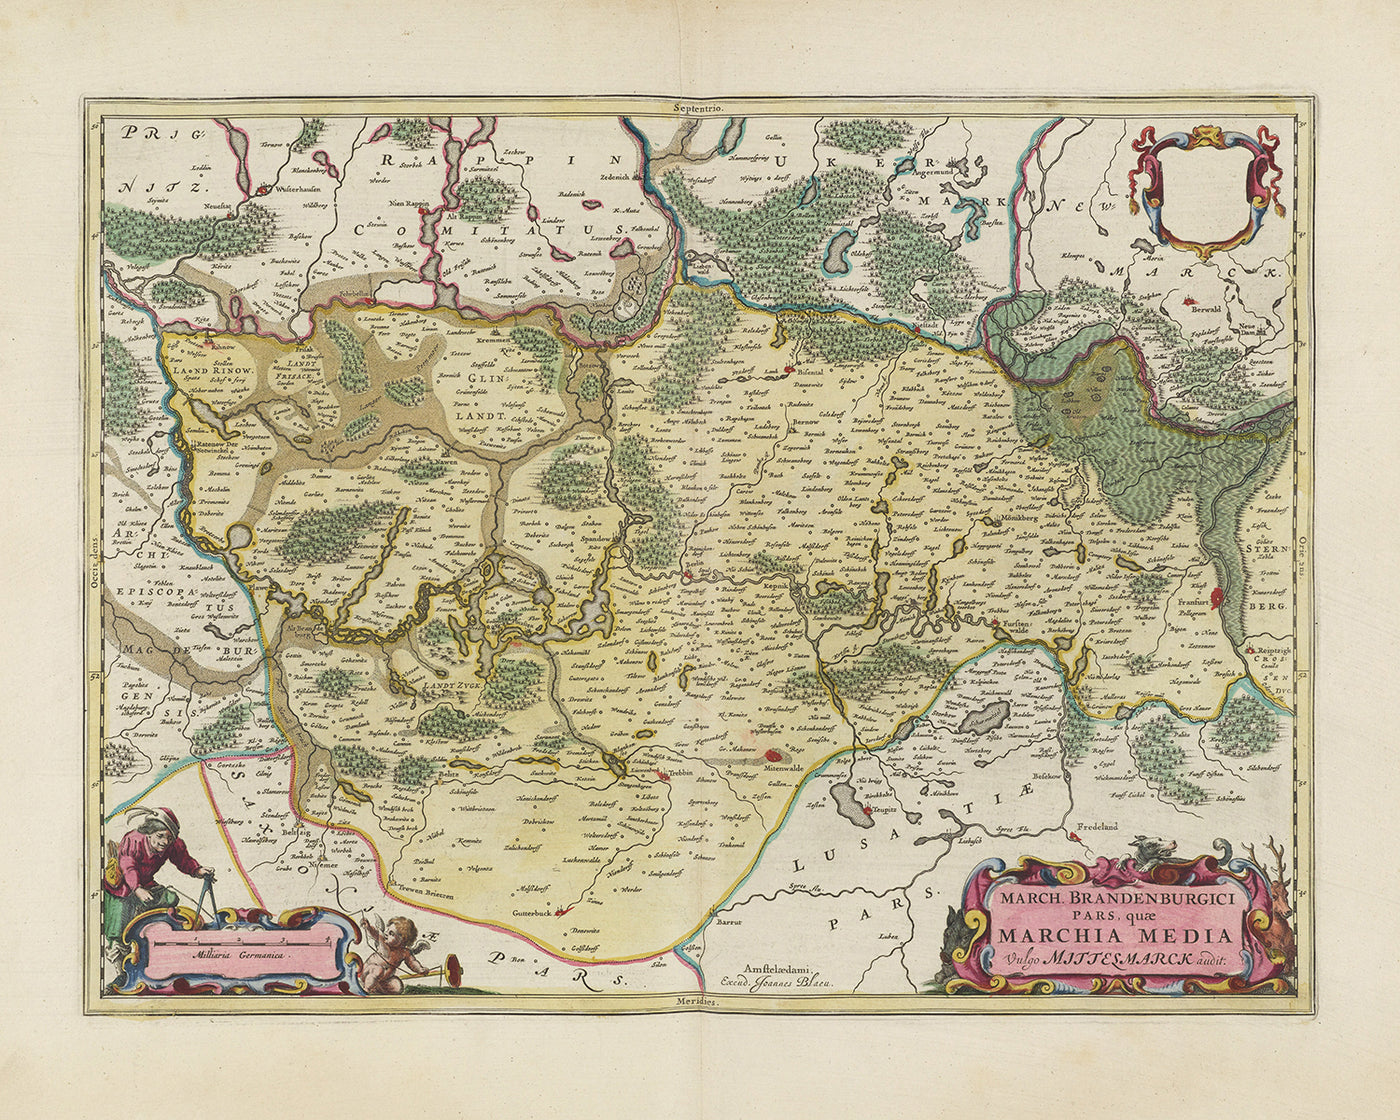 Ancienne carte de Berlin-Brandebourg par Joan Blaeu, 1665 : Berlin, Potsdam, Cottbus, Francfort-sur-l'Oder et Brandebourg-sur-la-Havel, avec la Spree, la Havel et la Märkische Schweiz.